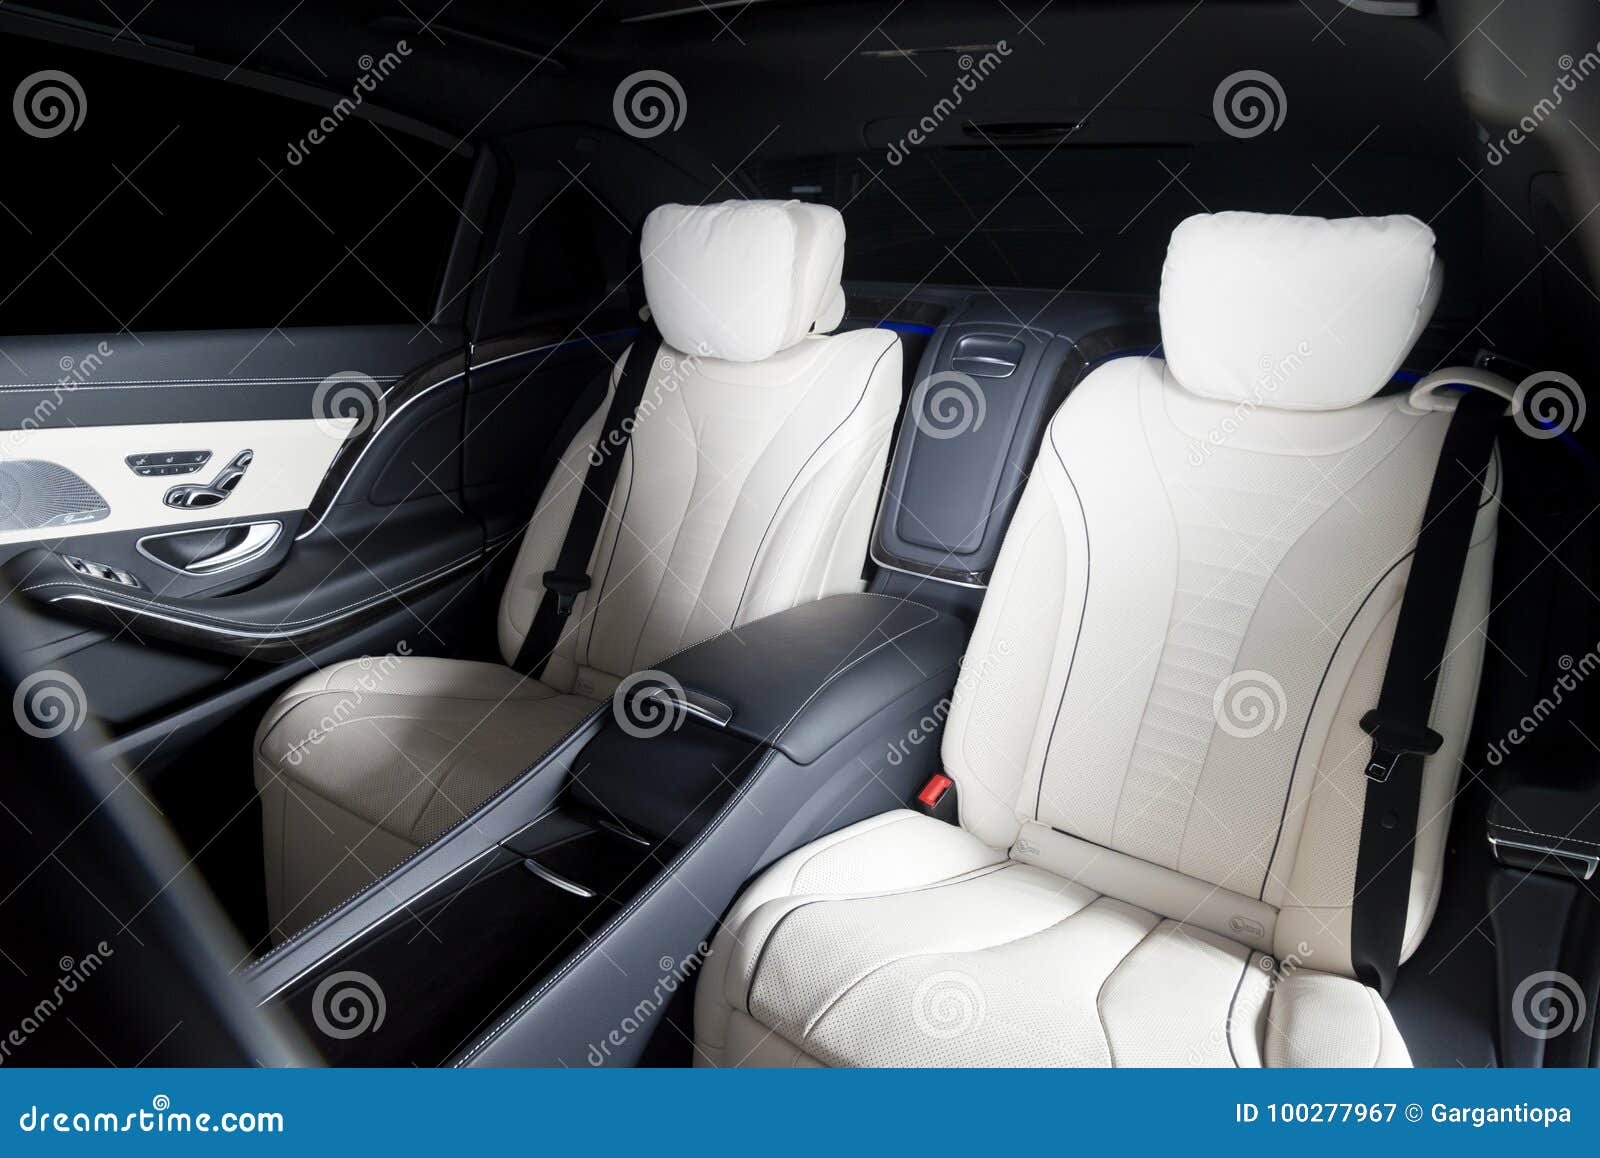 back seats of modern luxury car interior, black leather Stock Photo by  gargantiopa